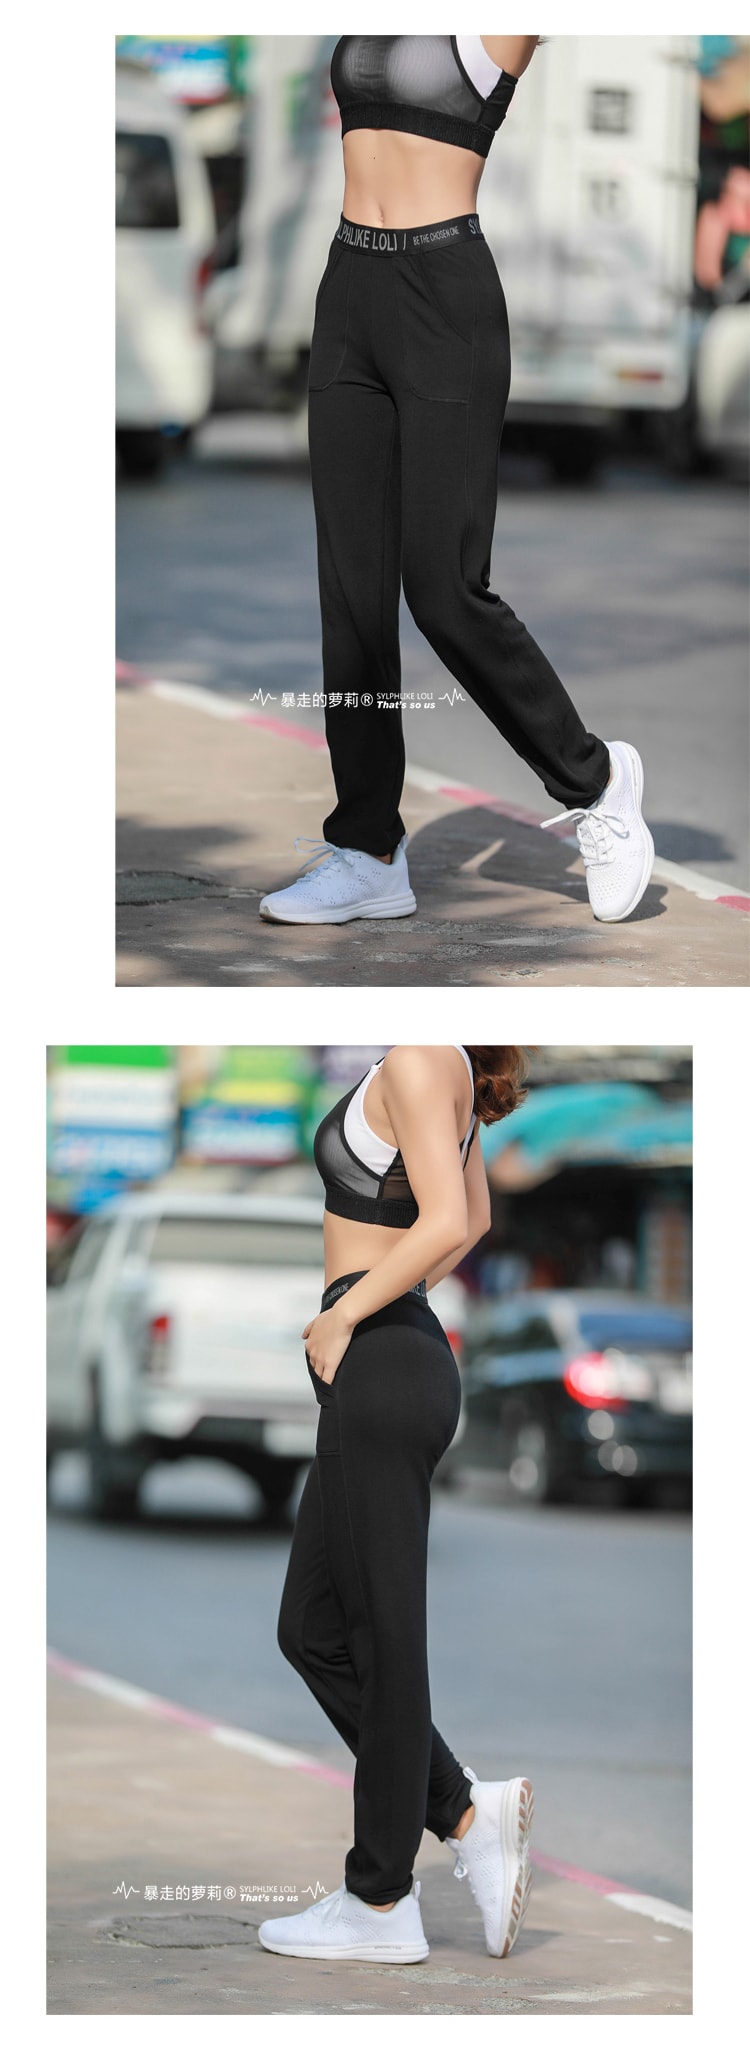  Sports Casual Elastic Pants For Running Yoga Train/Black#/XS